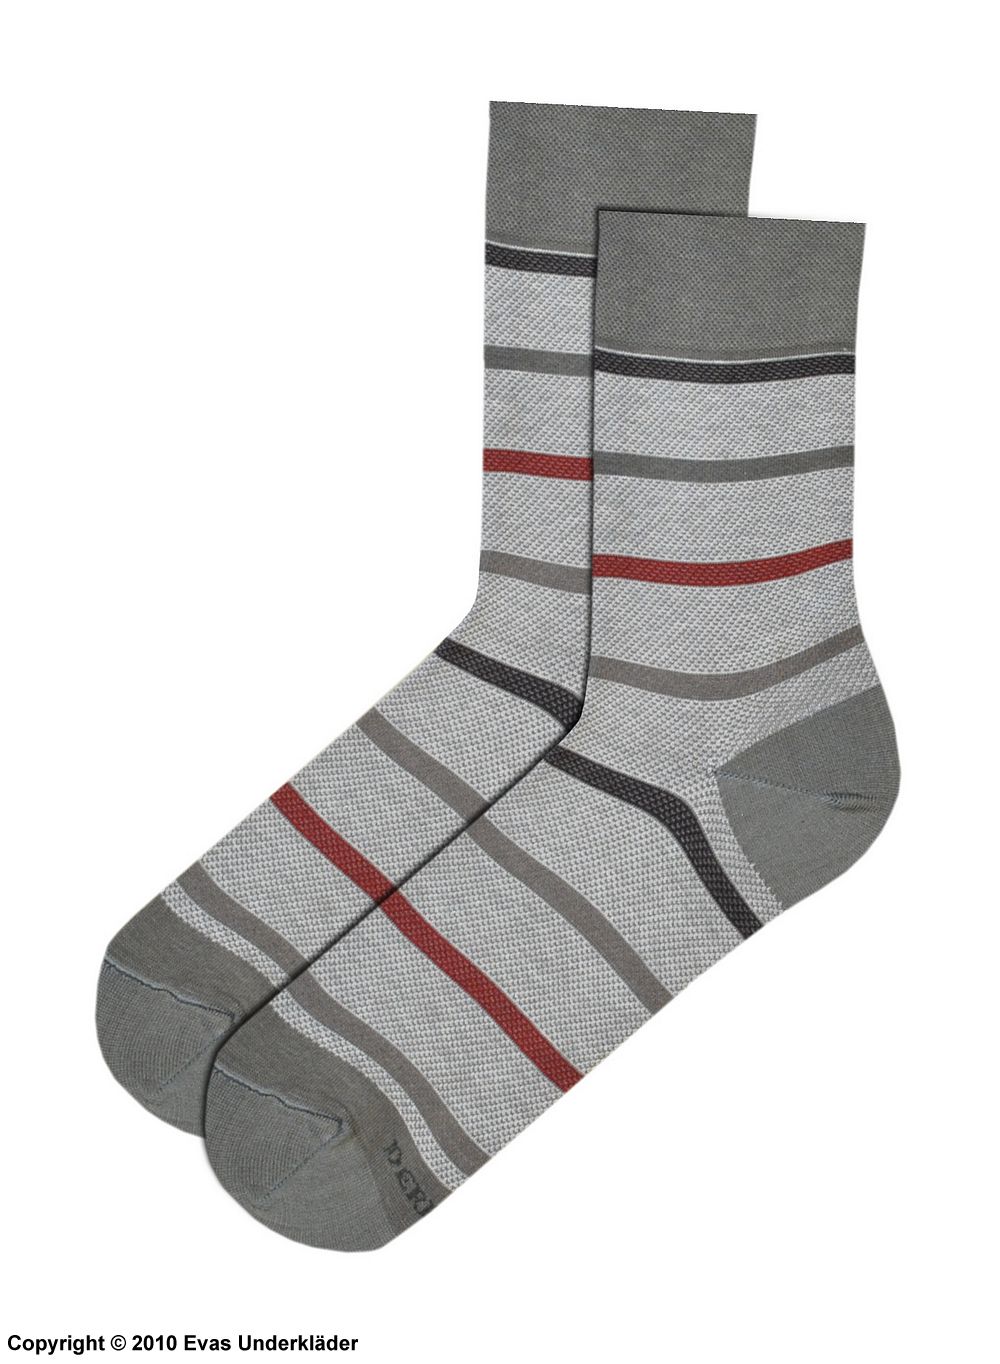 Men's socks, soft cotton, stripes